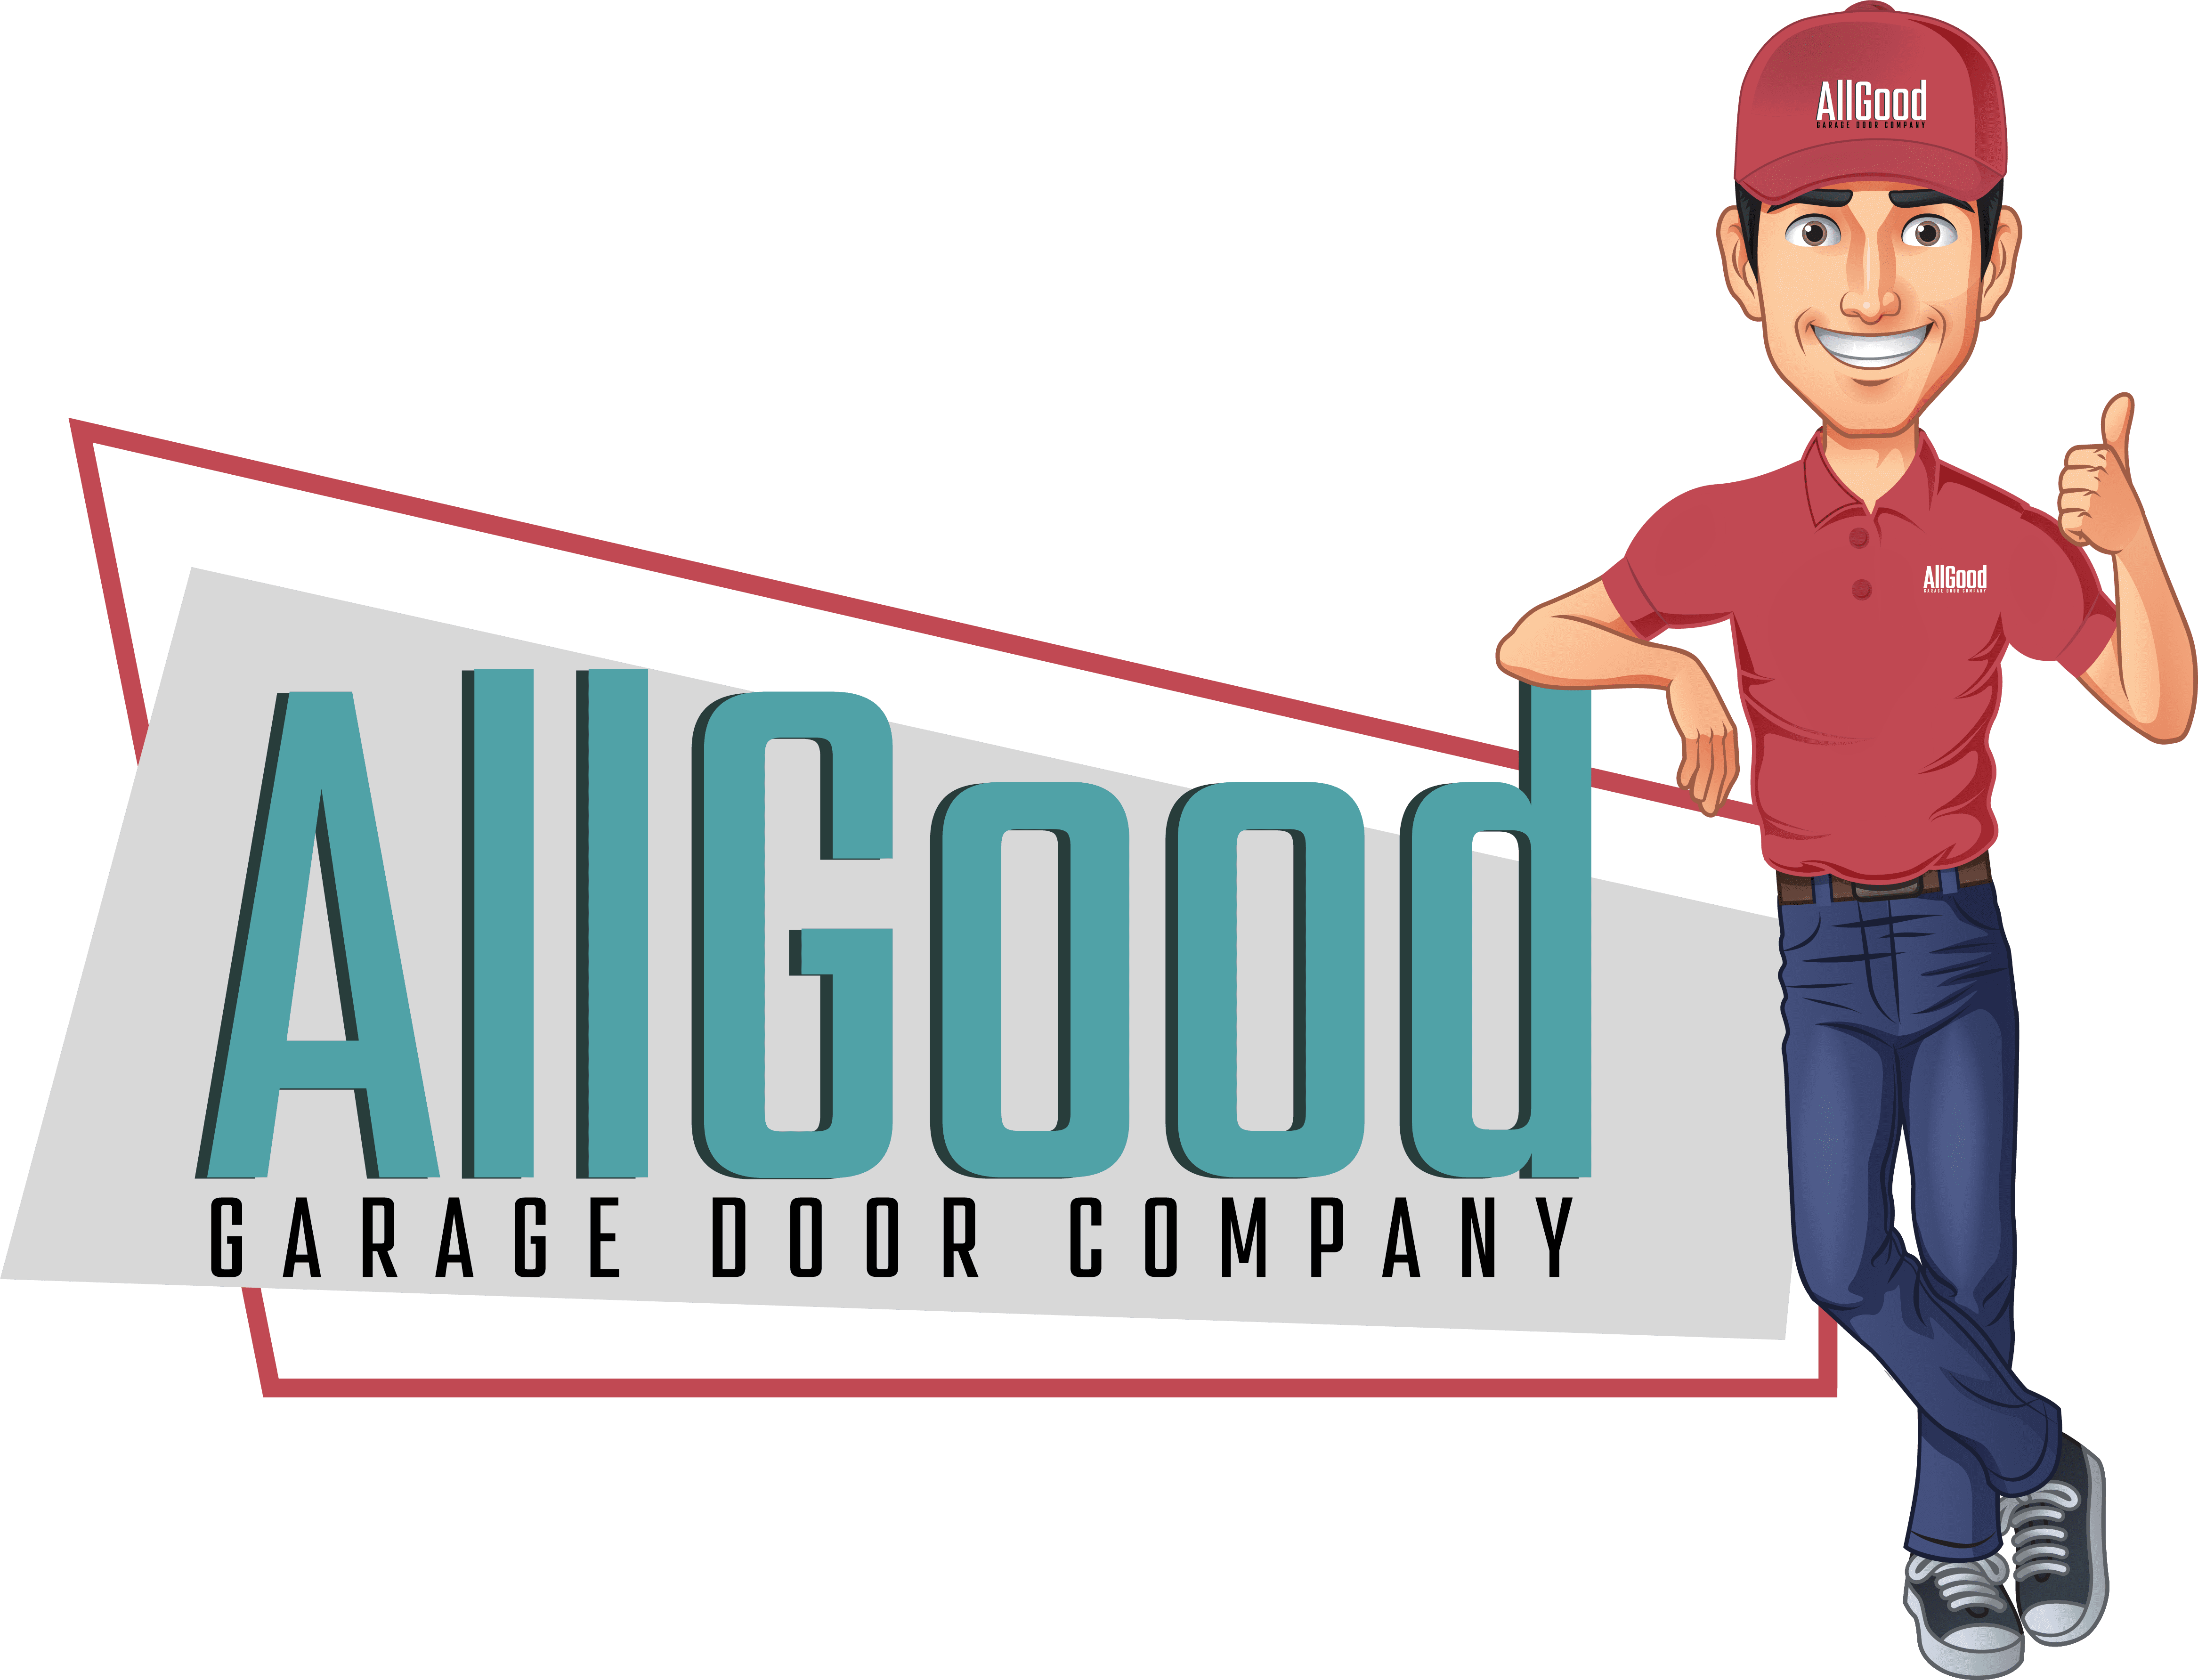 allgood logo with mascot